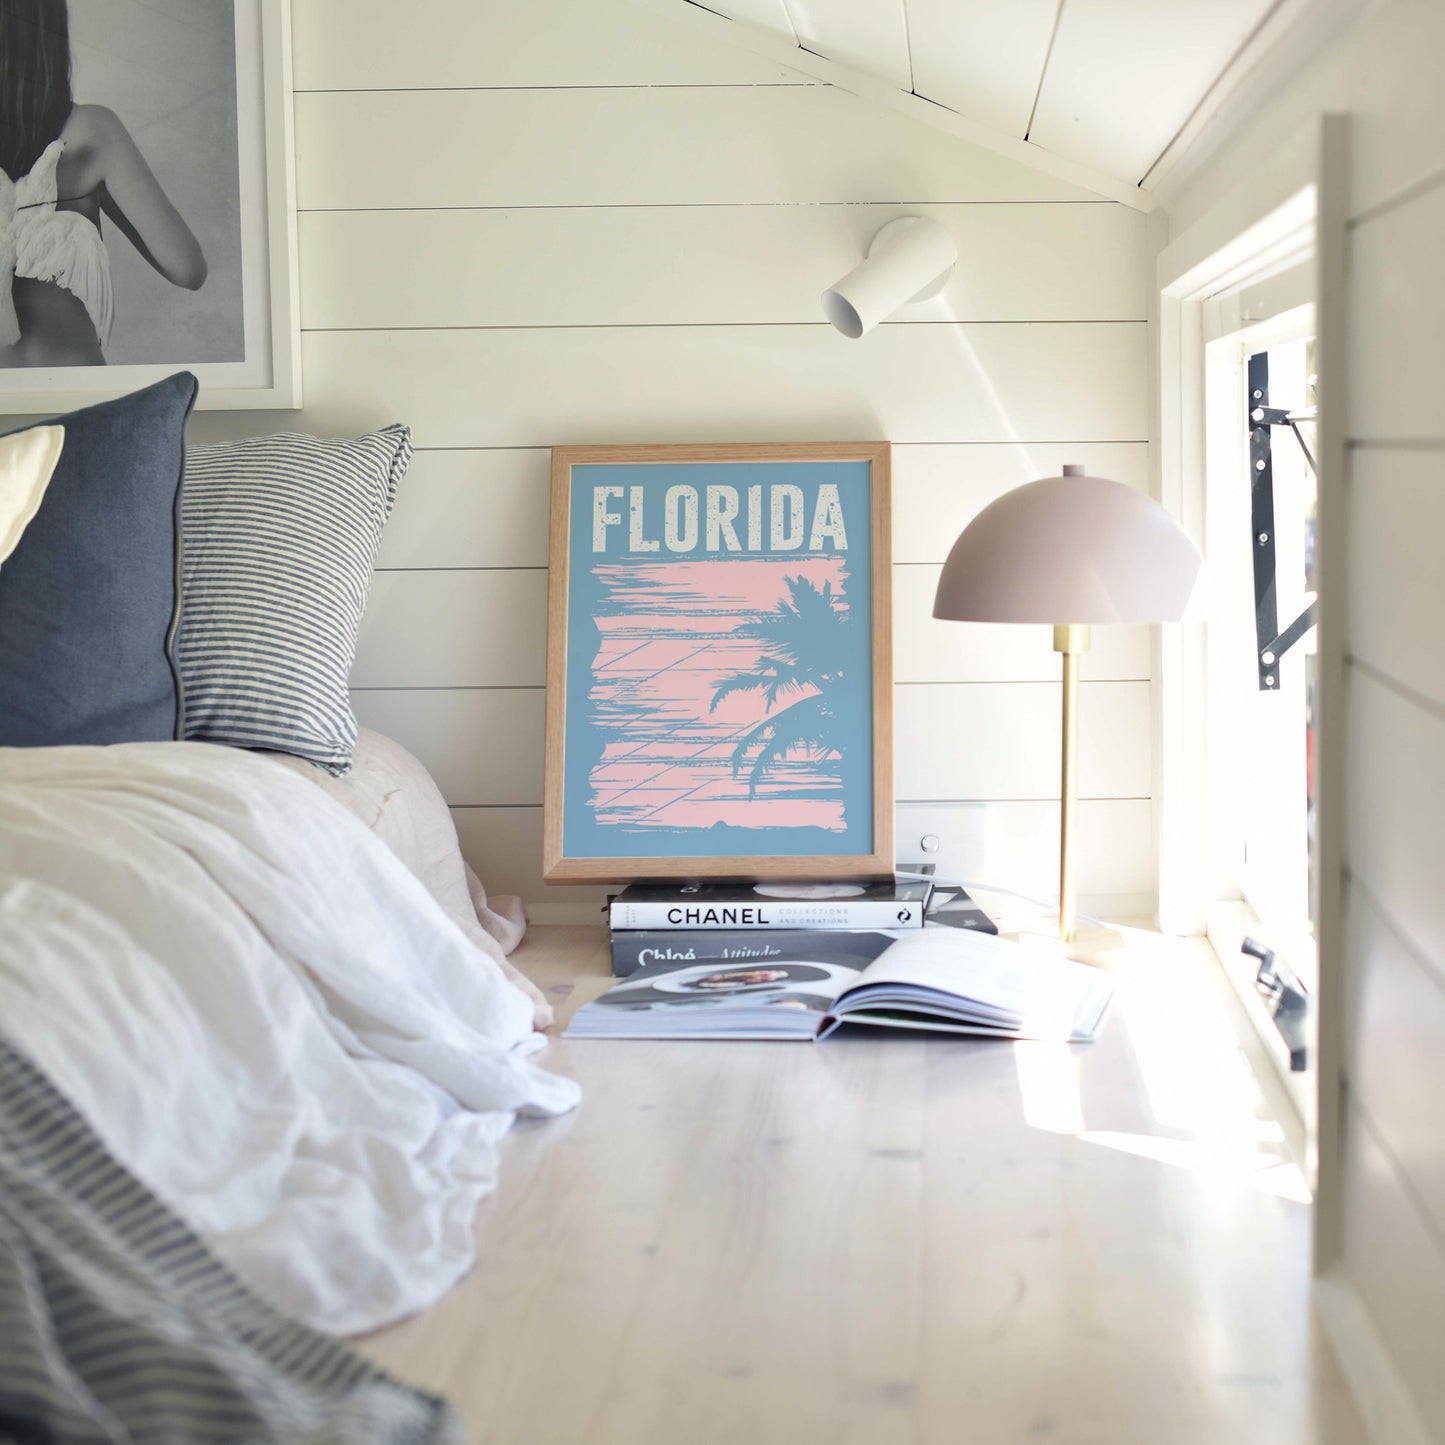 Florida Blue Travel Poster